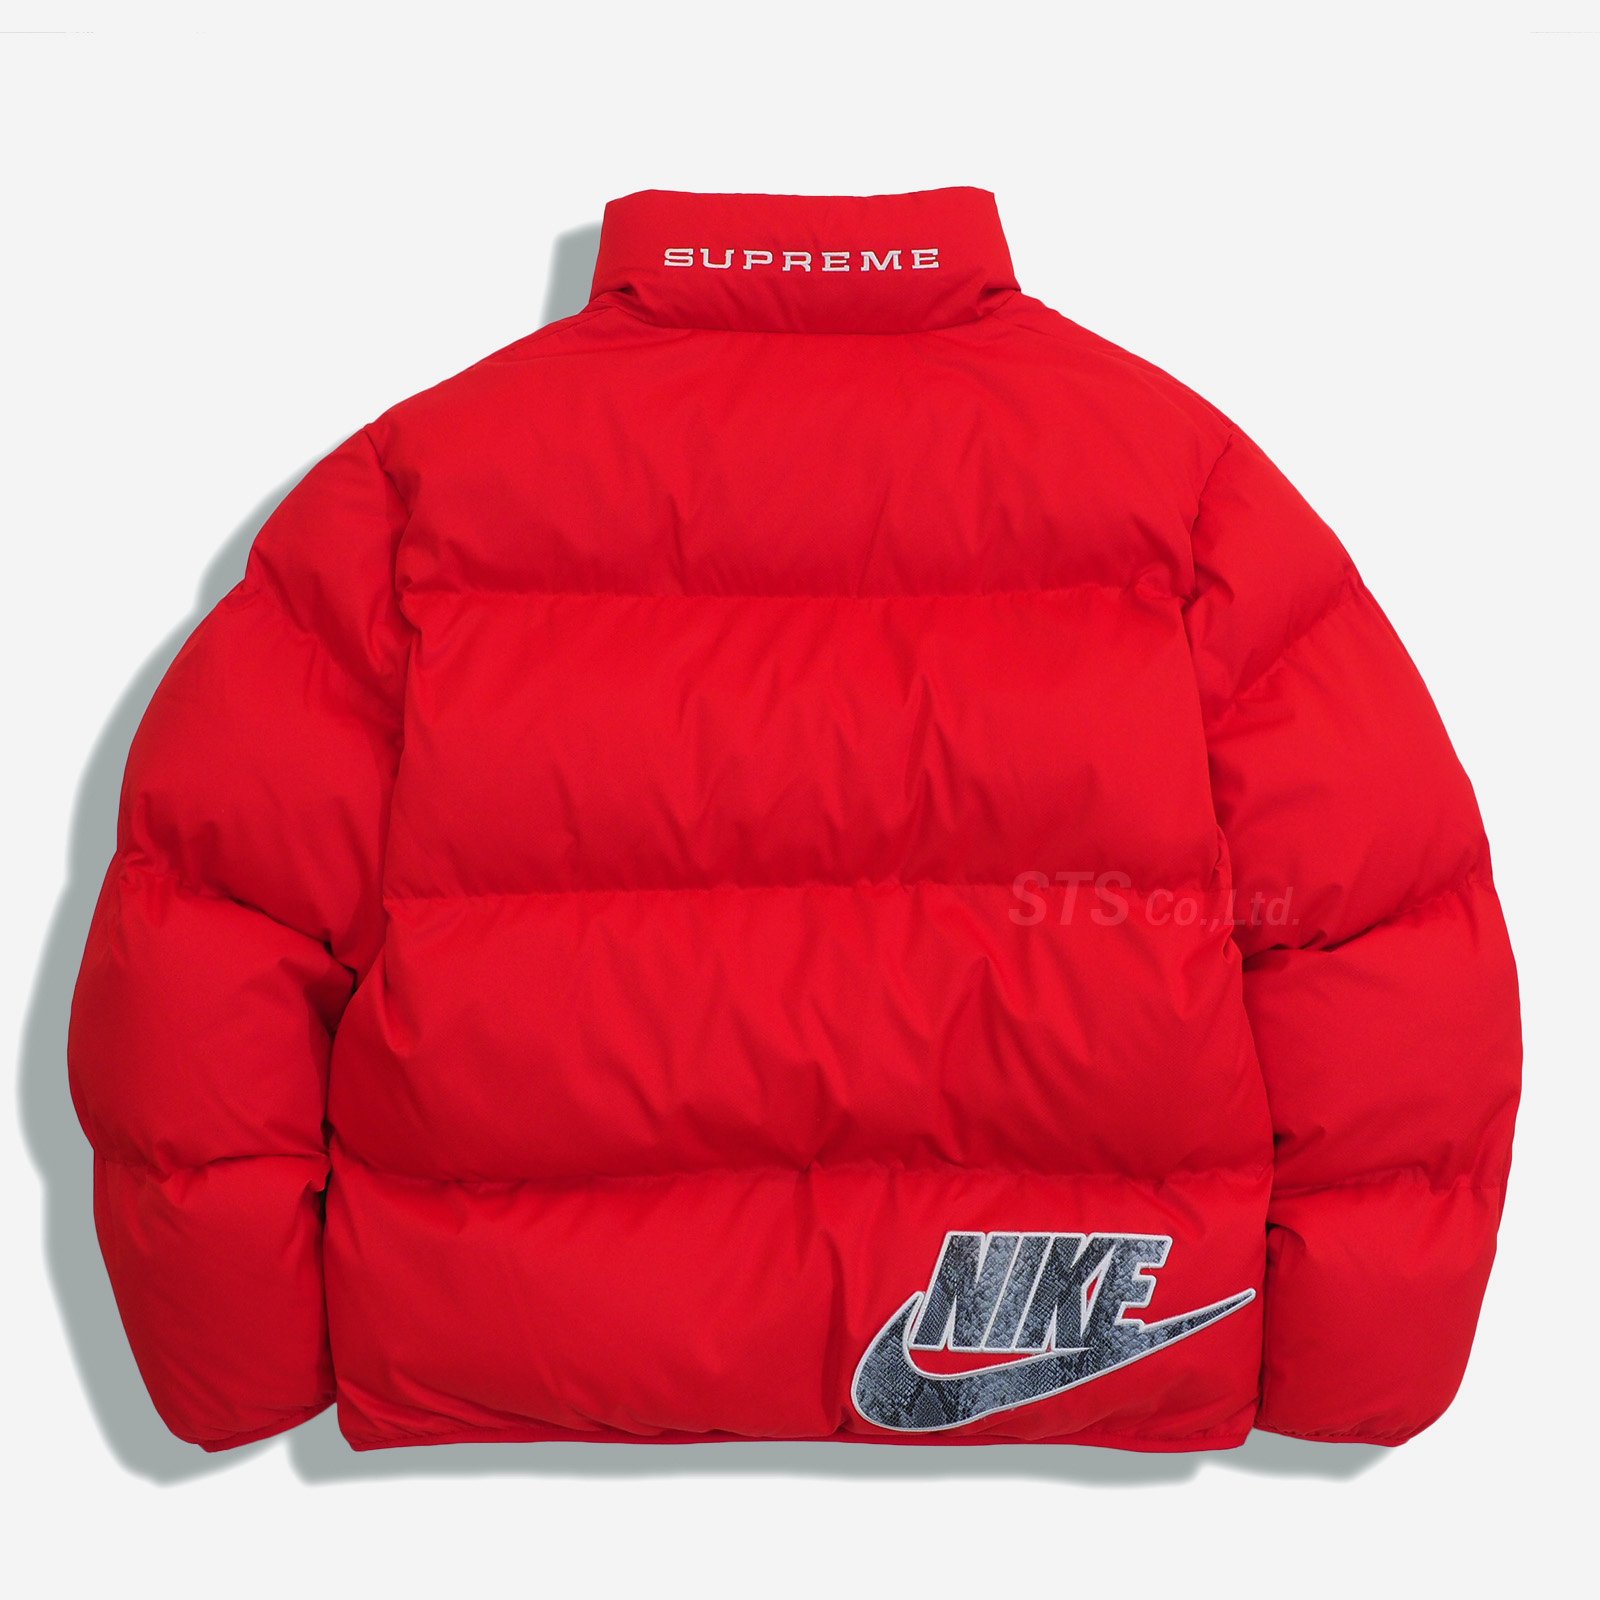 Supreme/Nike Reversible Puffy Jacket - ParkSIDER